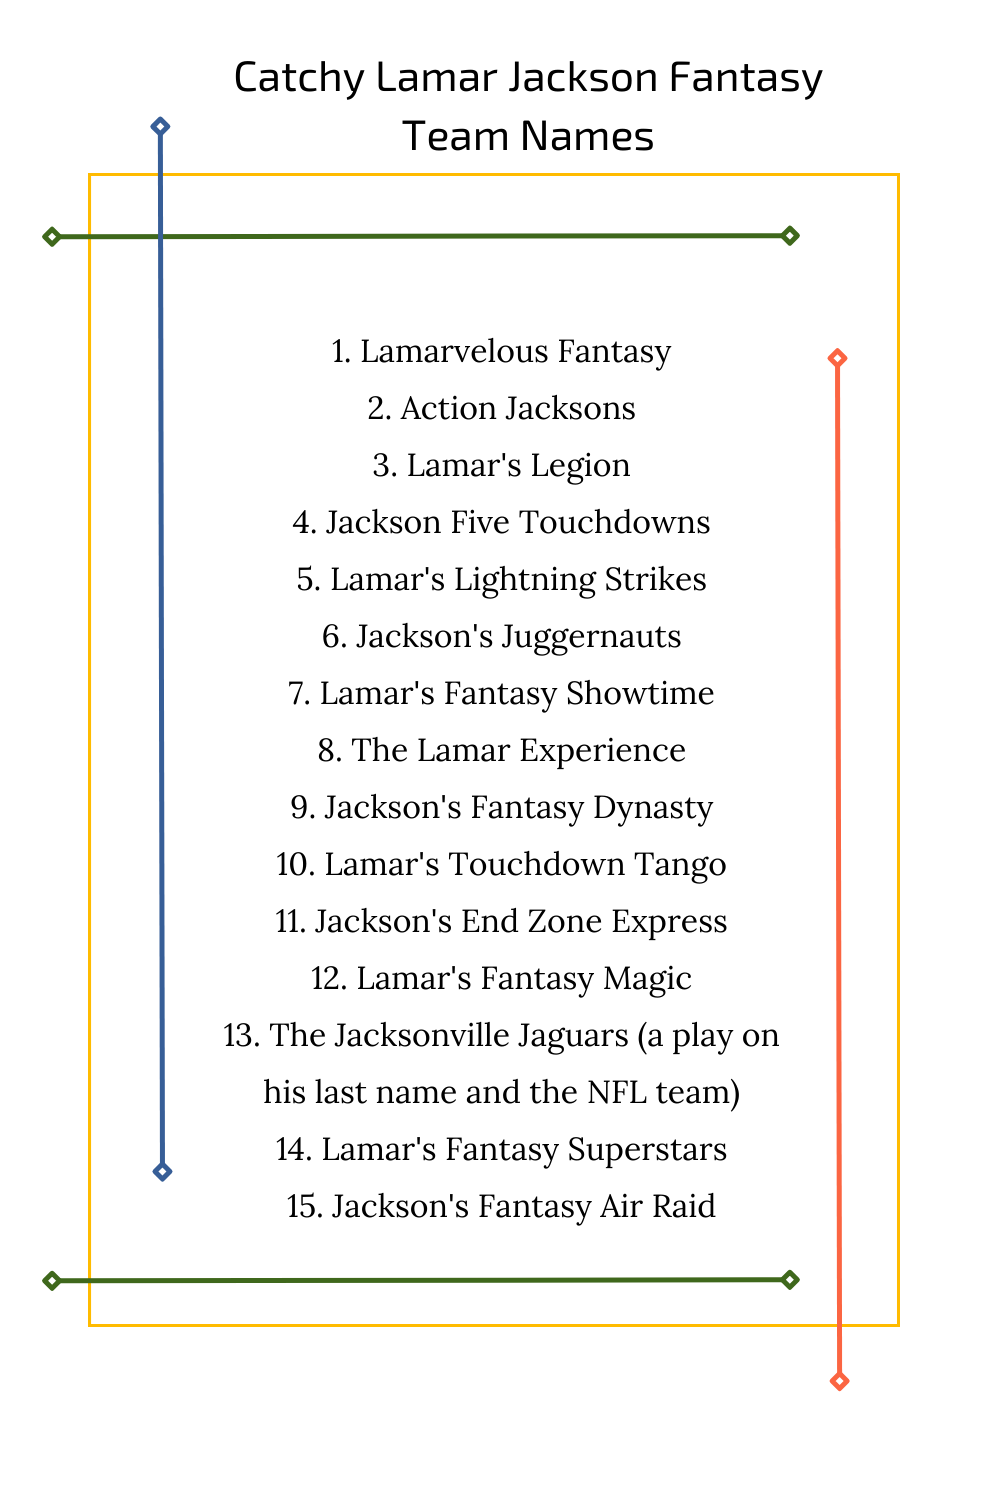 Catchy Lamar Jackson Fantasy Team Names